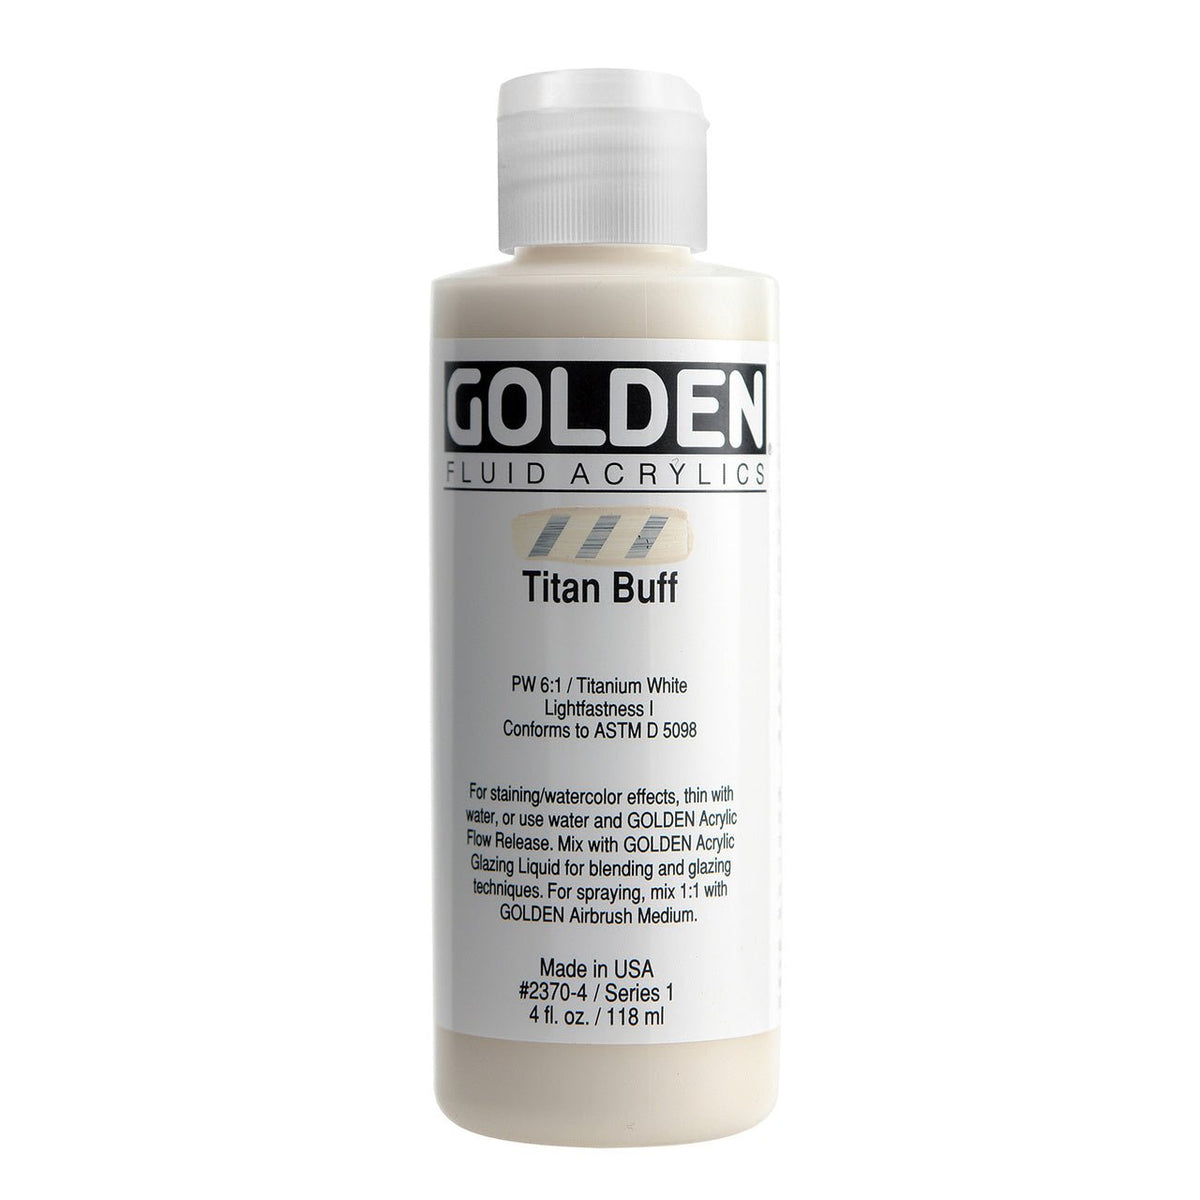 Golden Fluid Acrylic Titan Buff 4 oz - merriartist.com